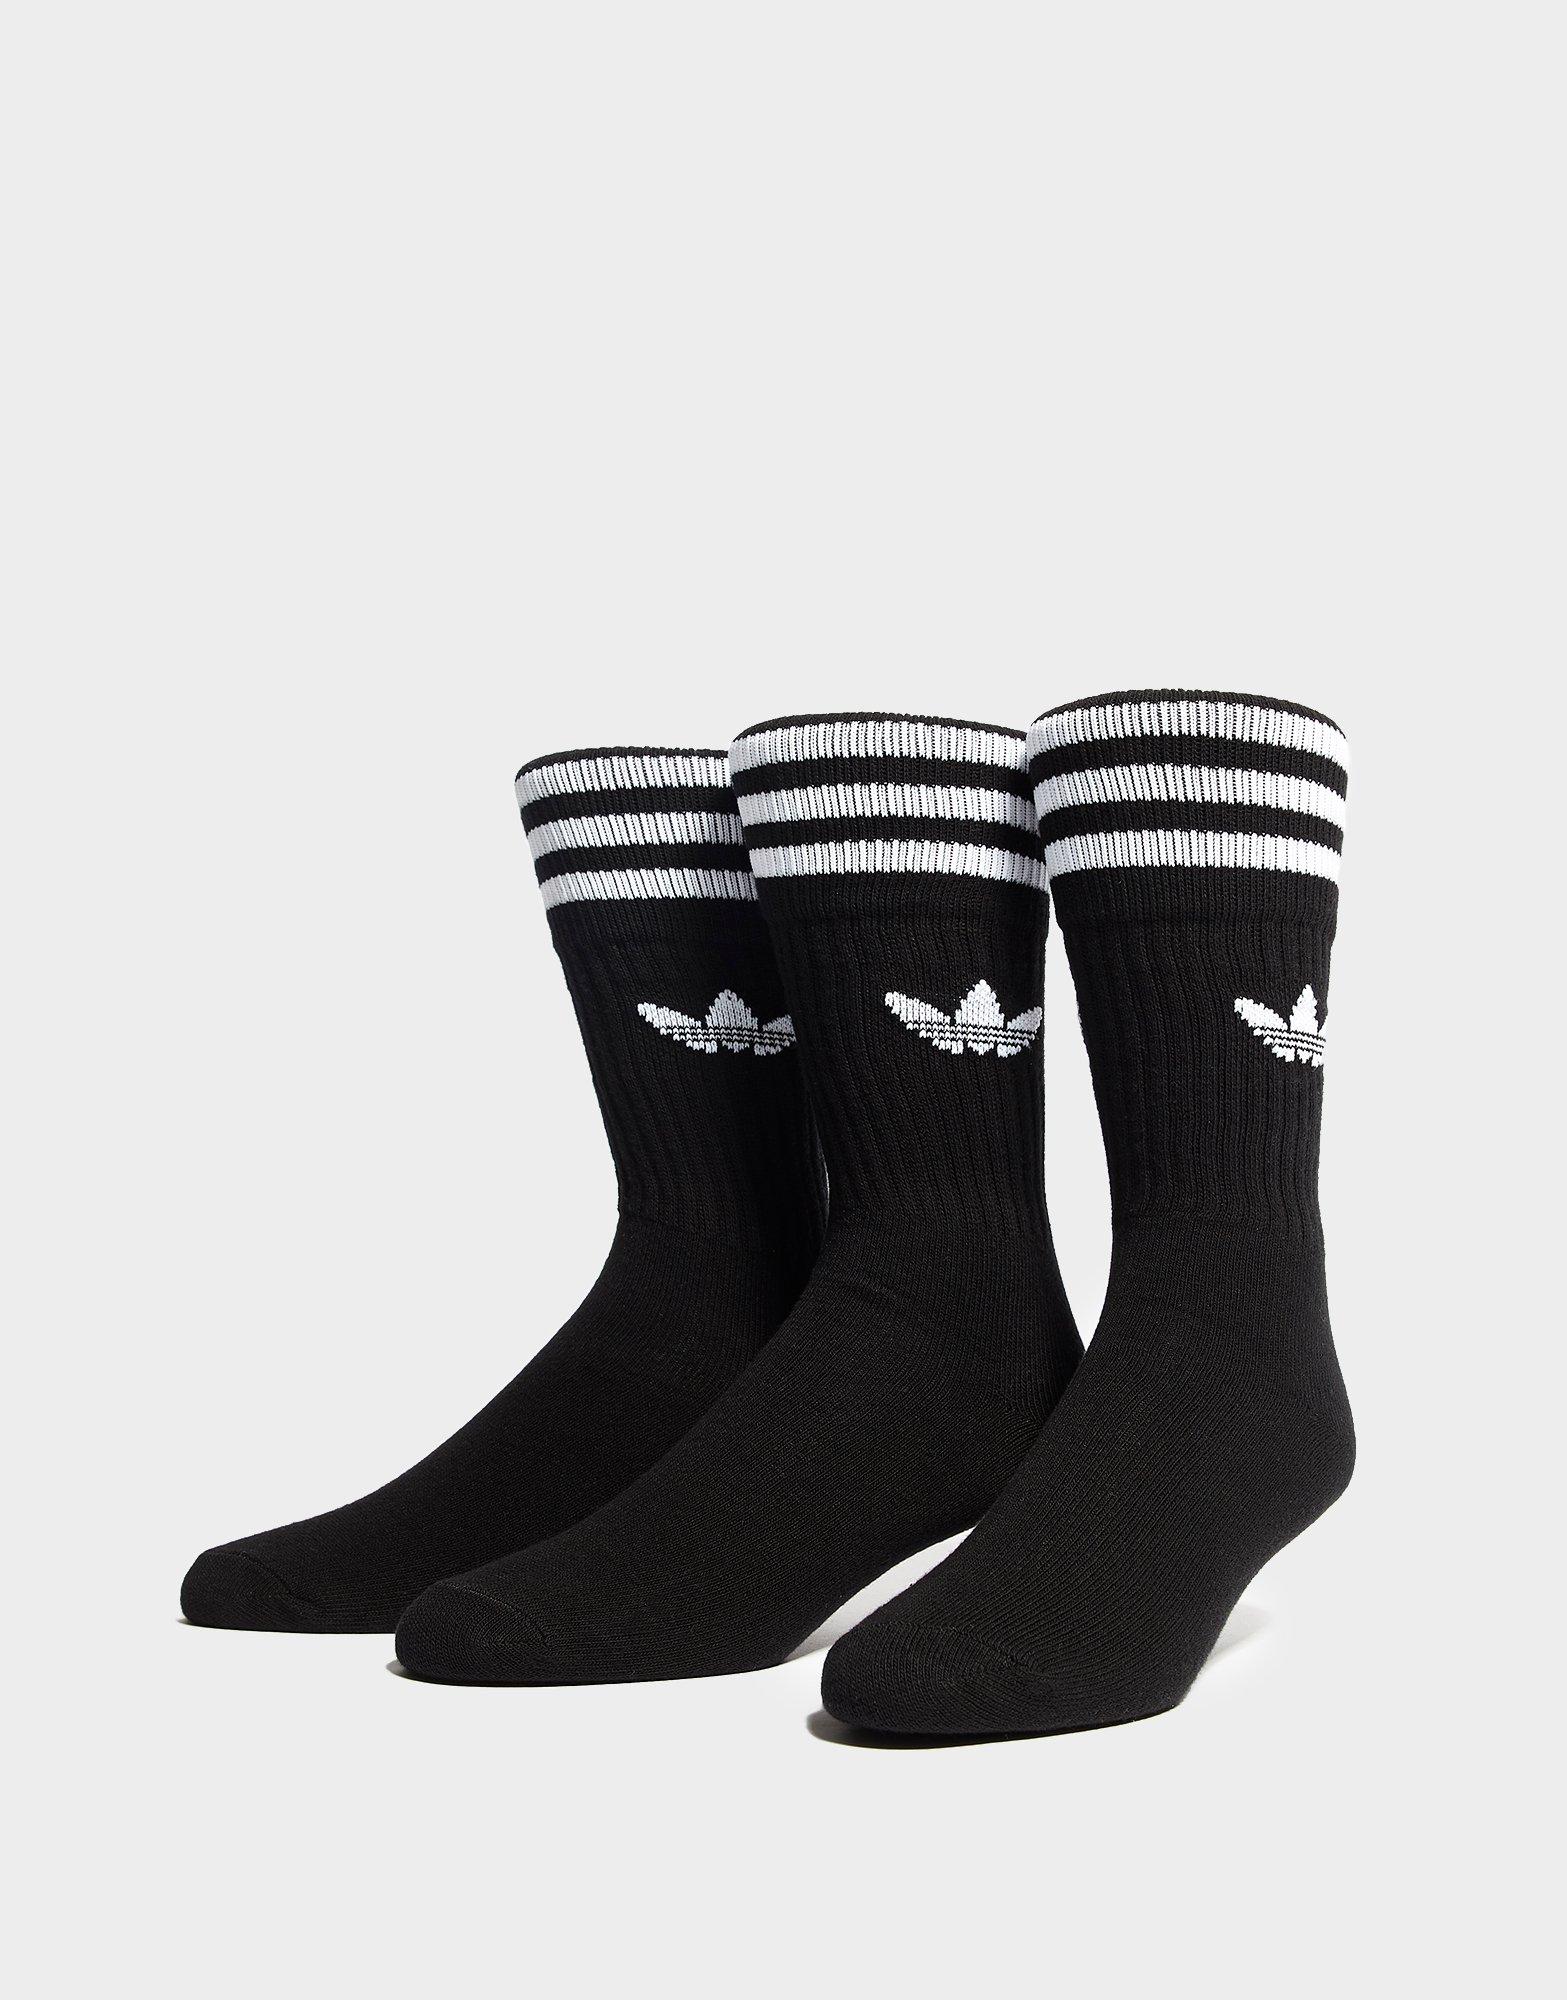 jd adidas socks